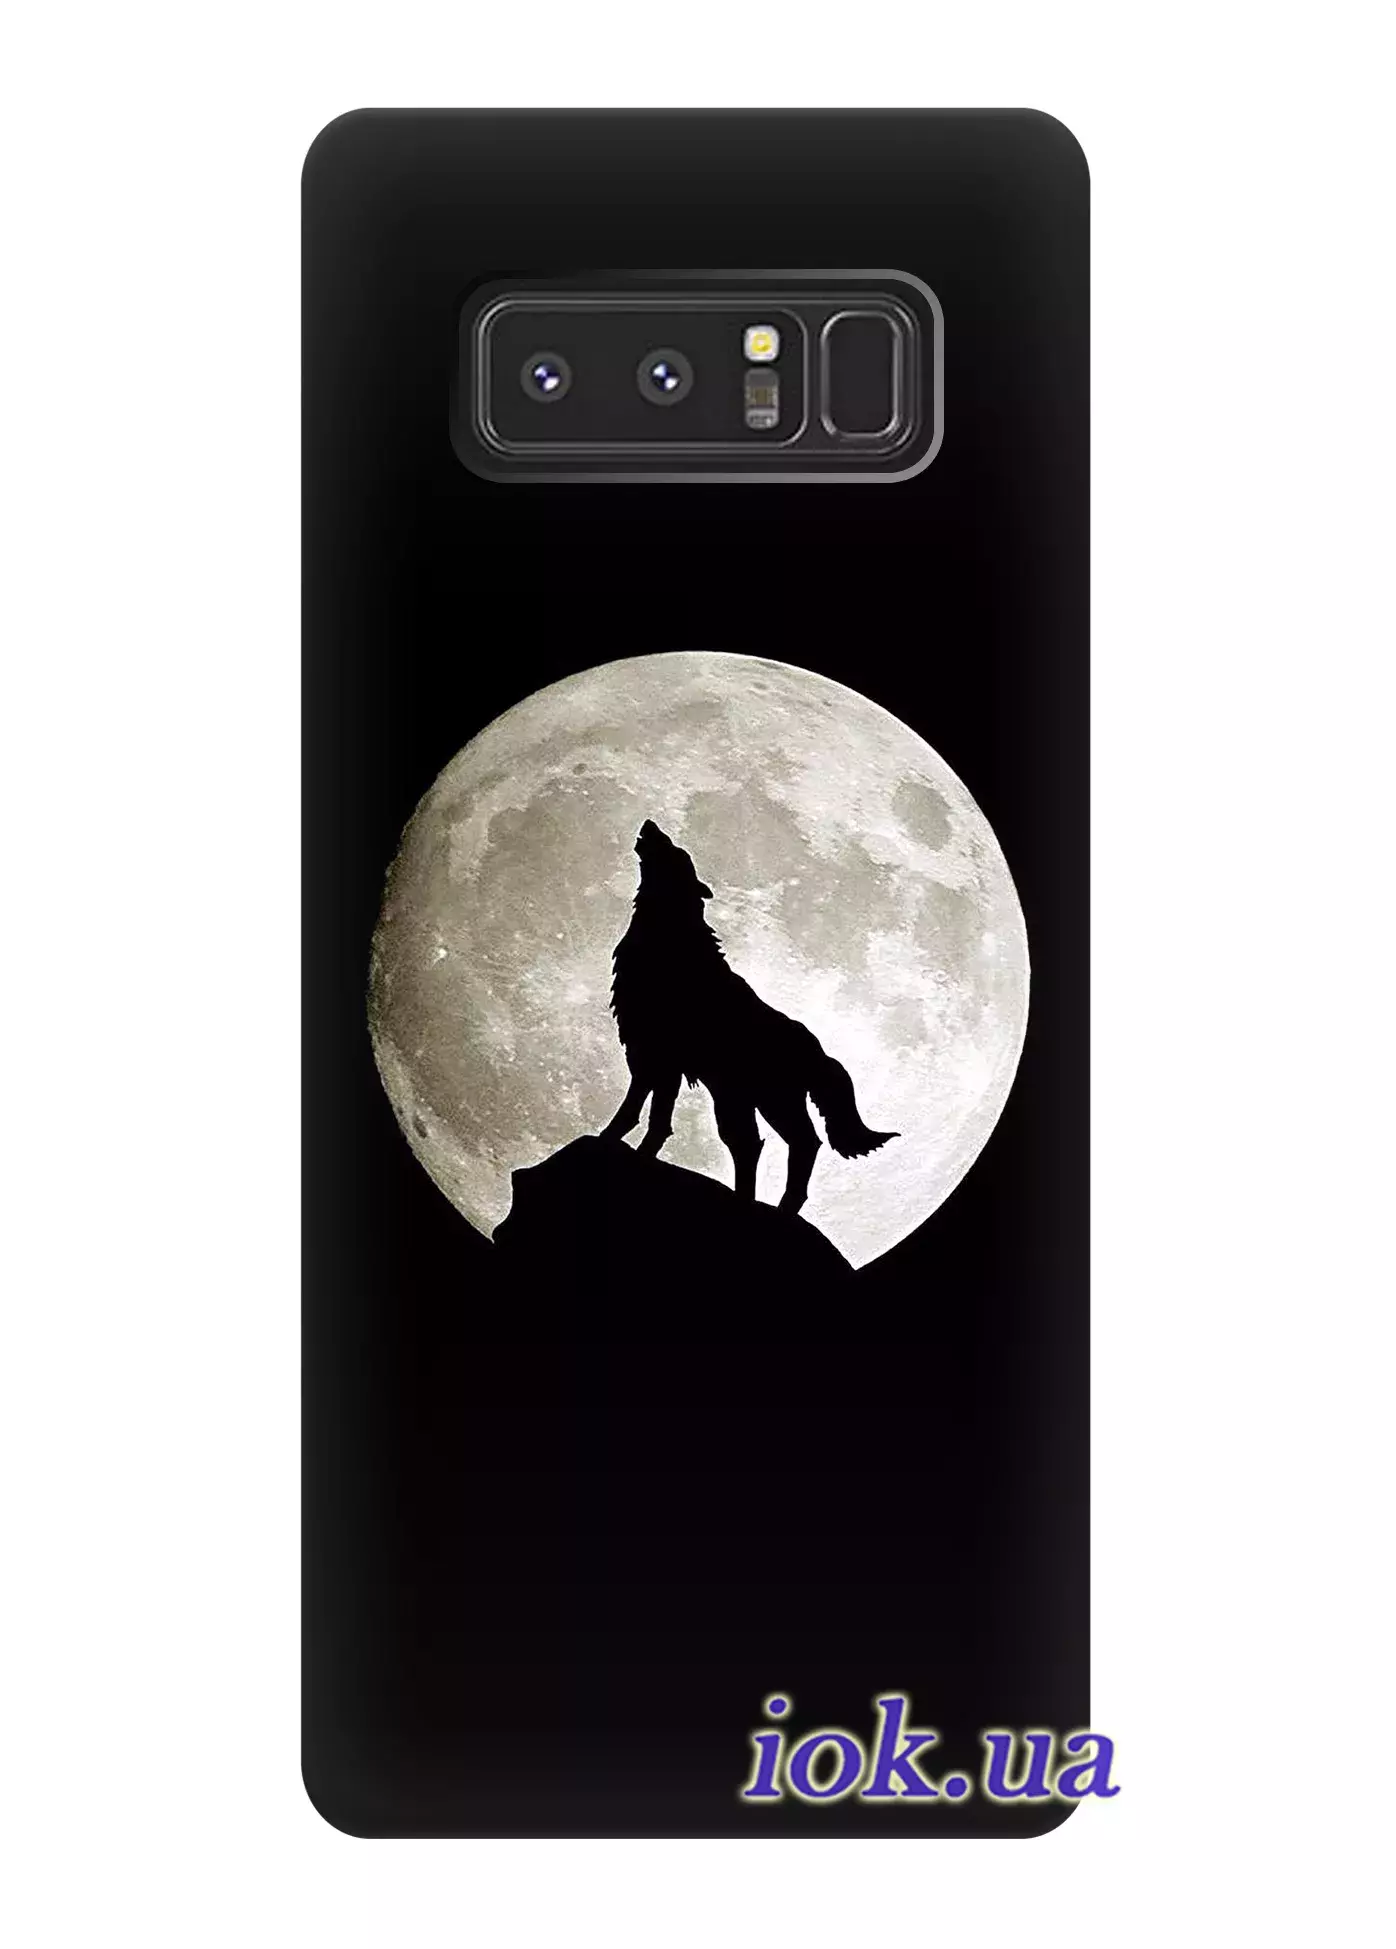 Чехол для Galaxy Note 8 - Одинокий волк